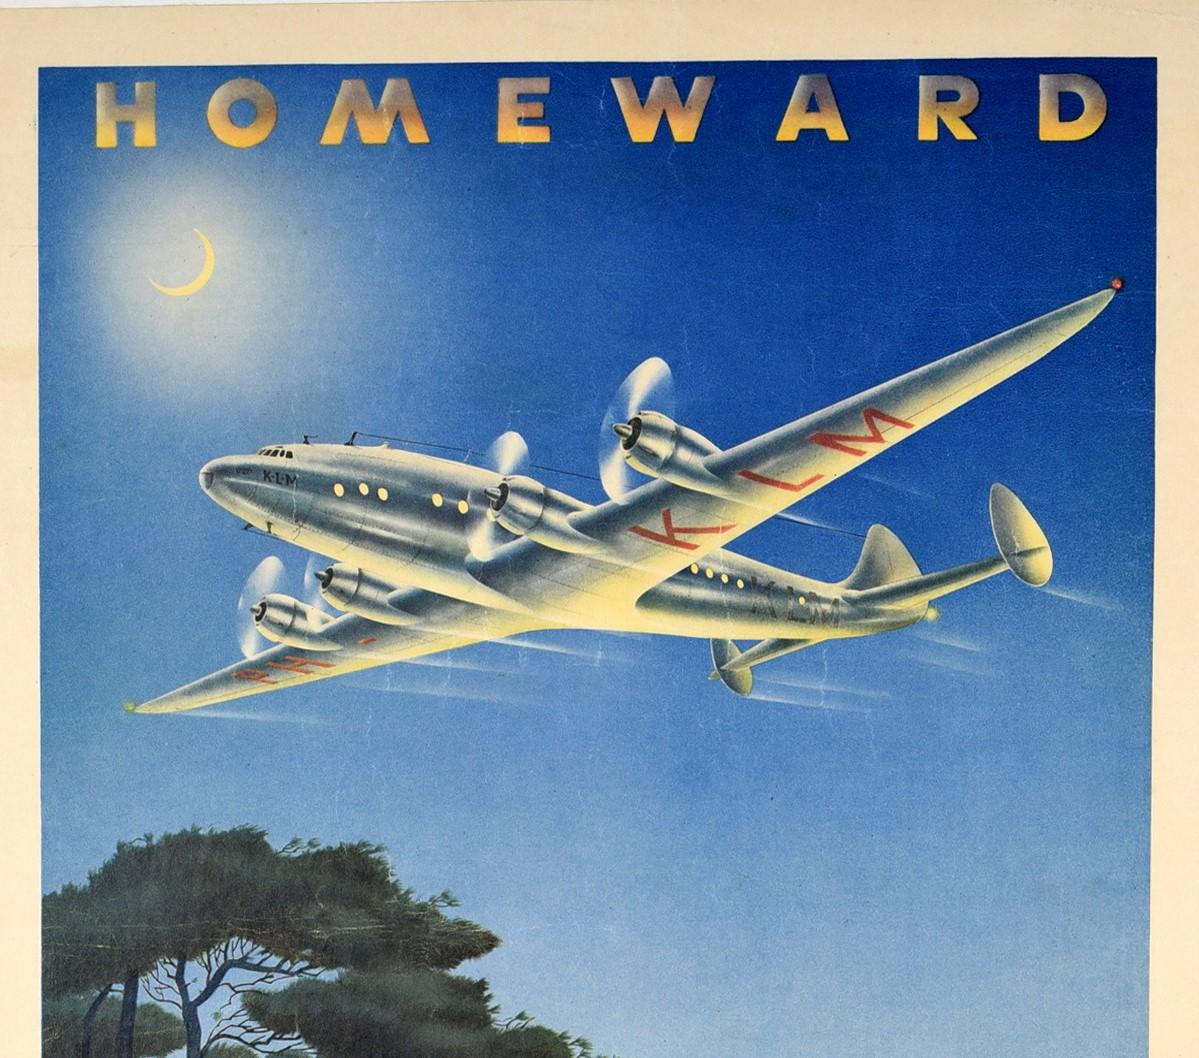 Original Vintage Poster Homeward KLM Royal Dutch Airlines Propeller Plane Travel - Print by Paul Erkelens